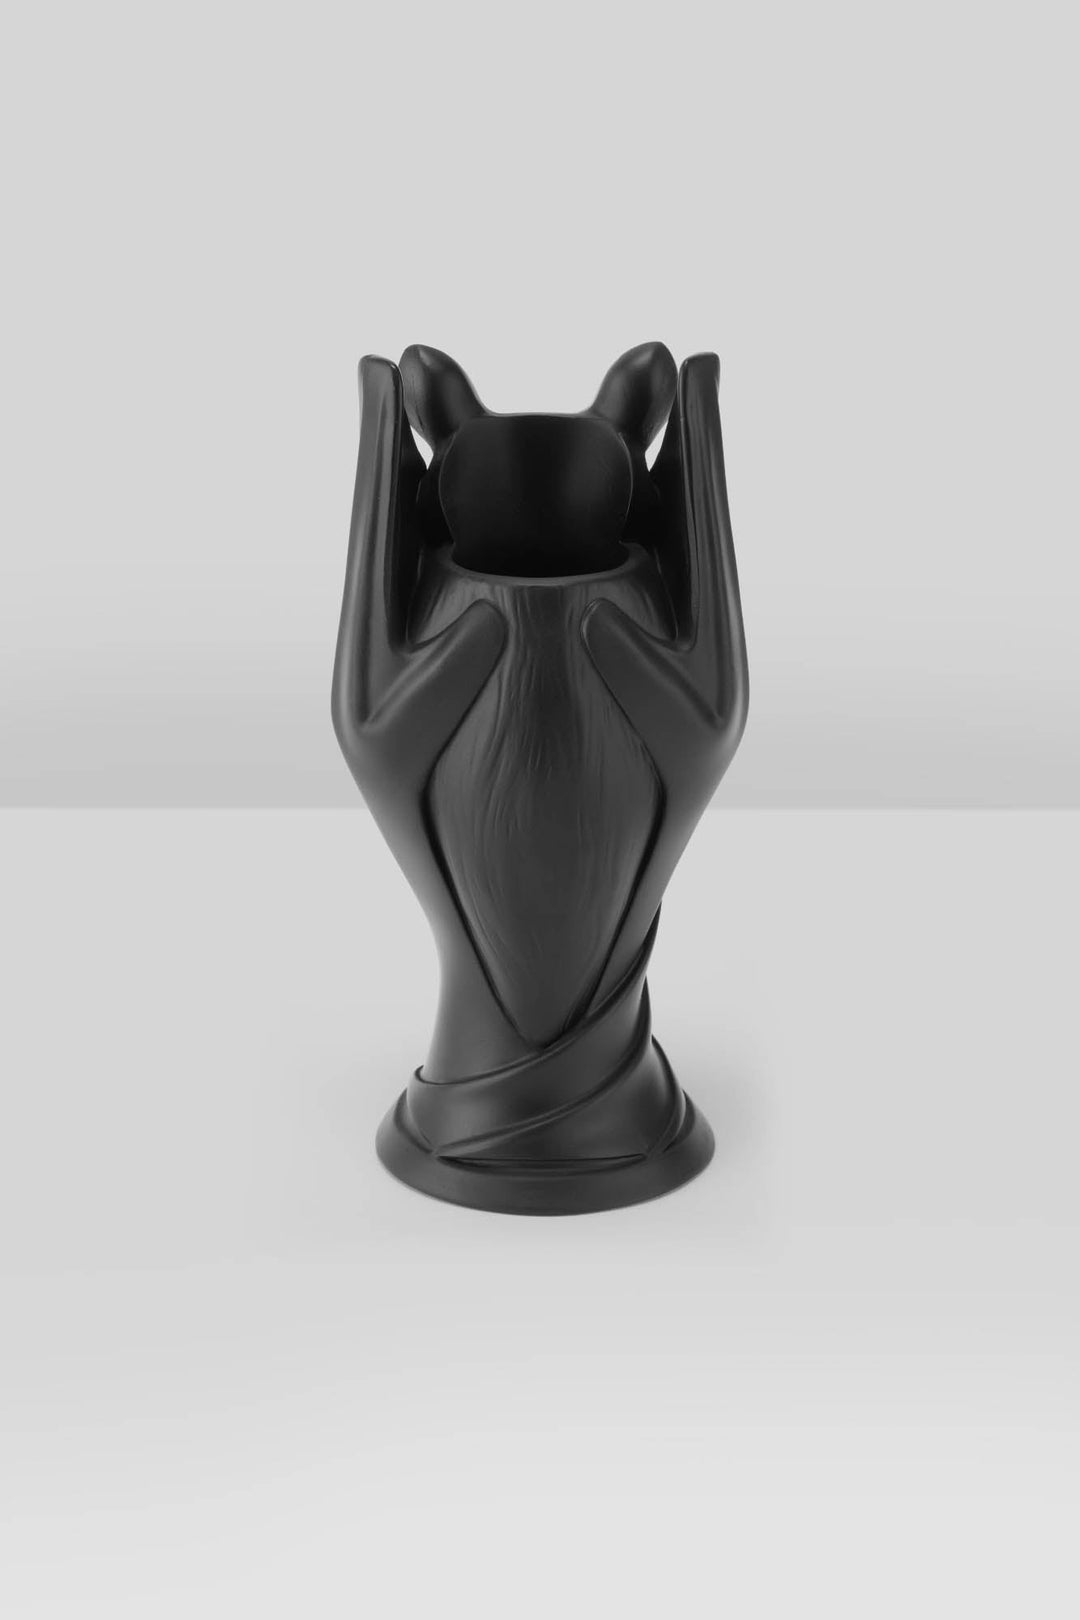 gothic bat vase for flower arrangement 